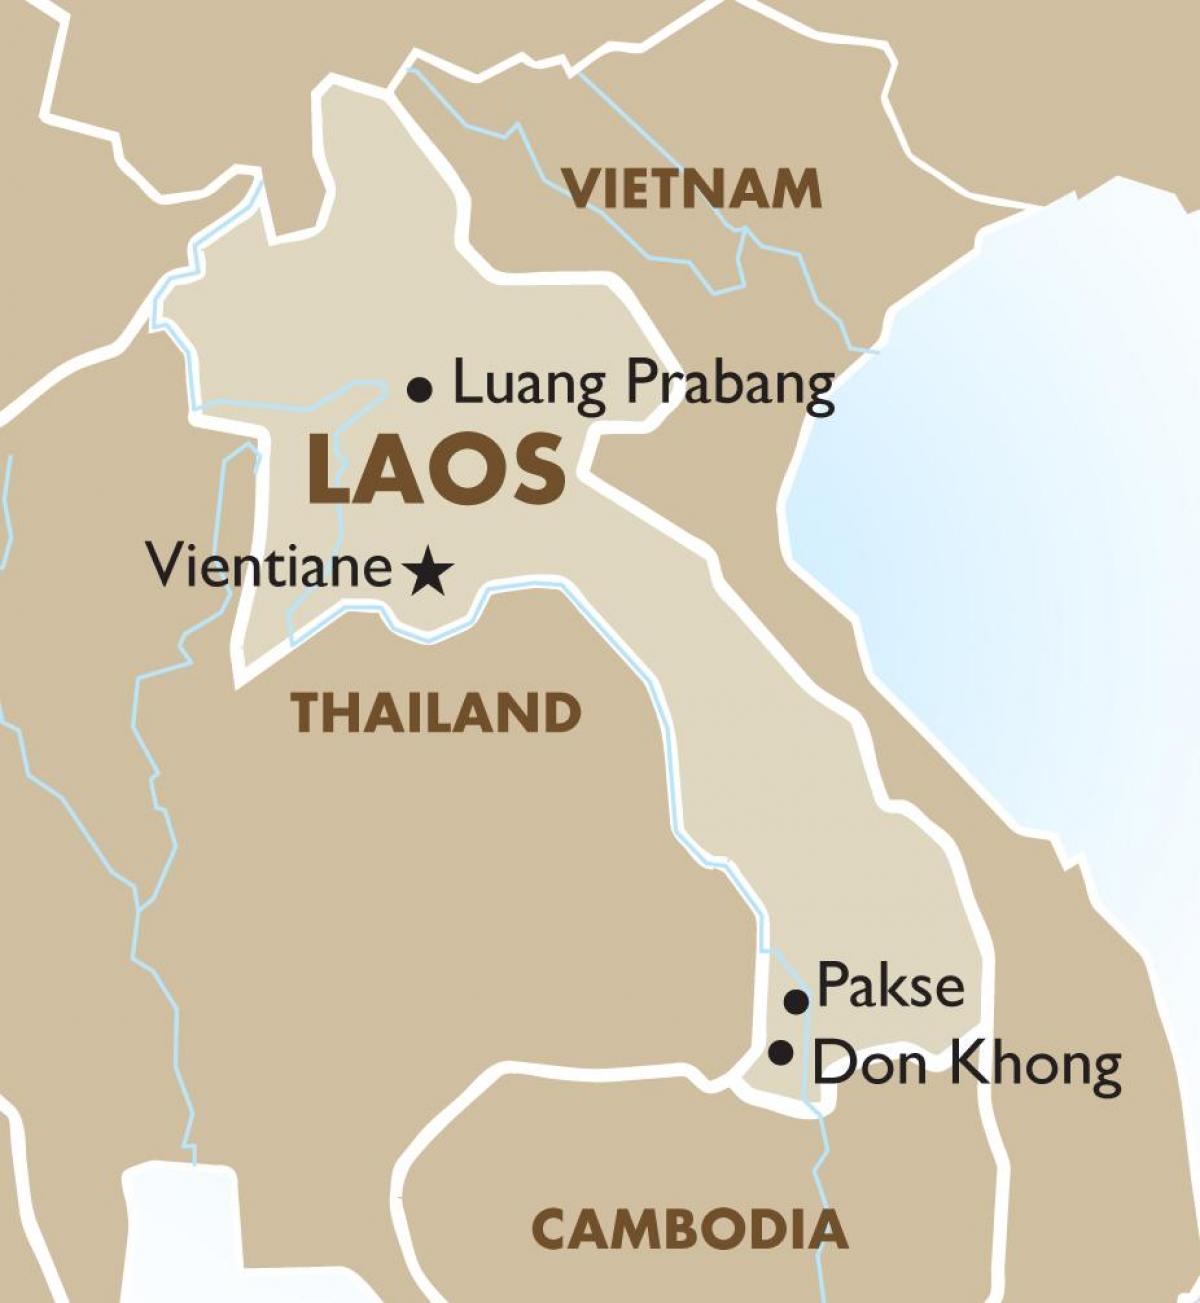 Mapa de la capital de laos 